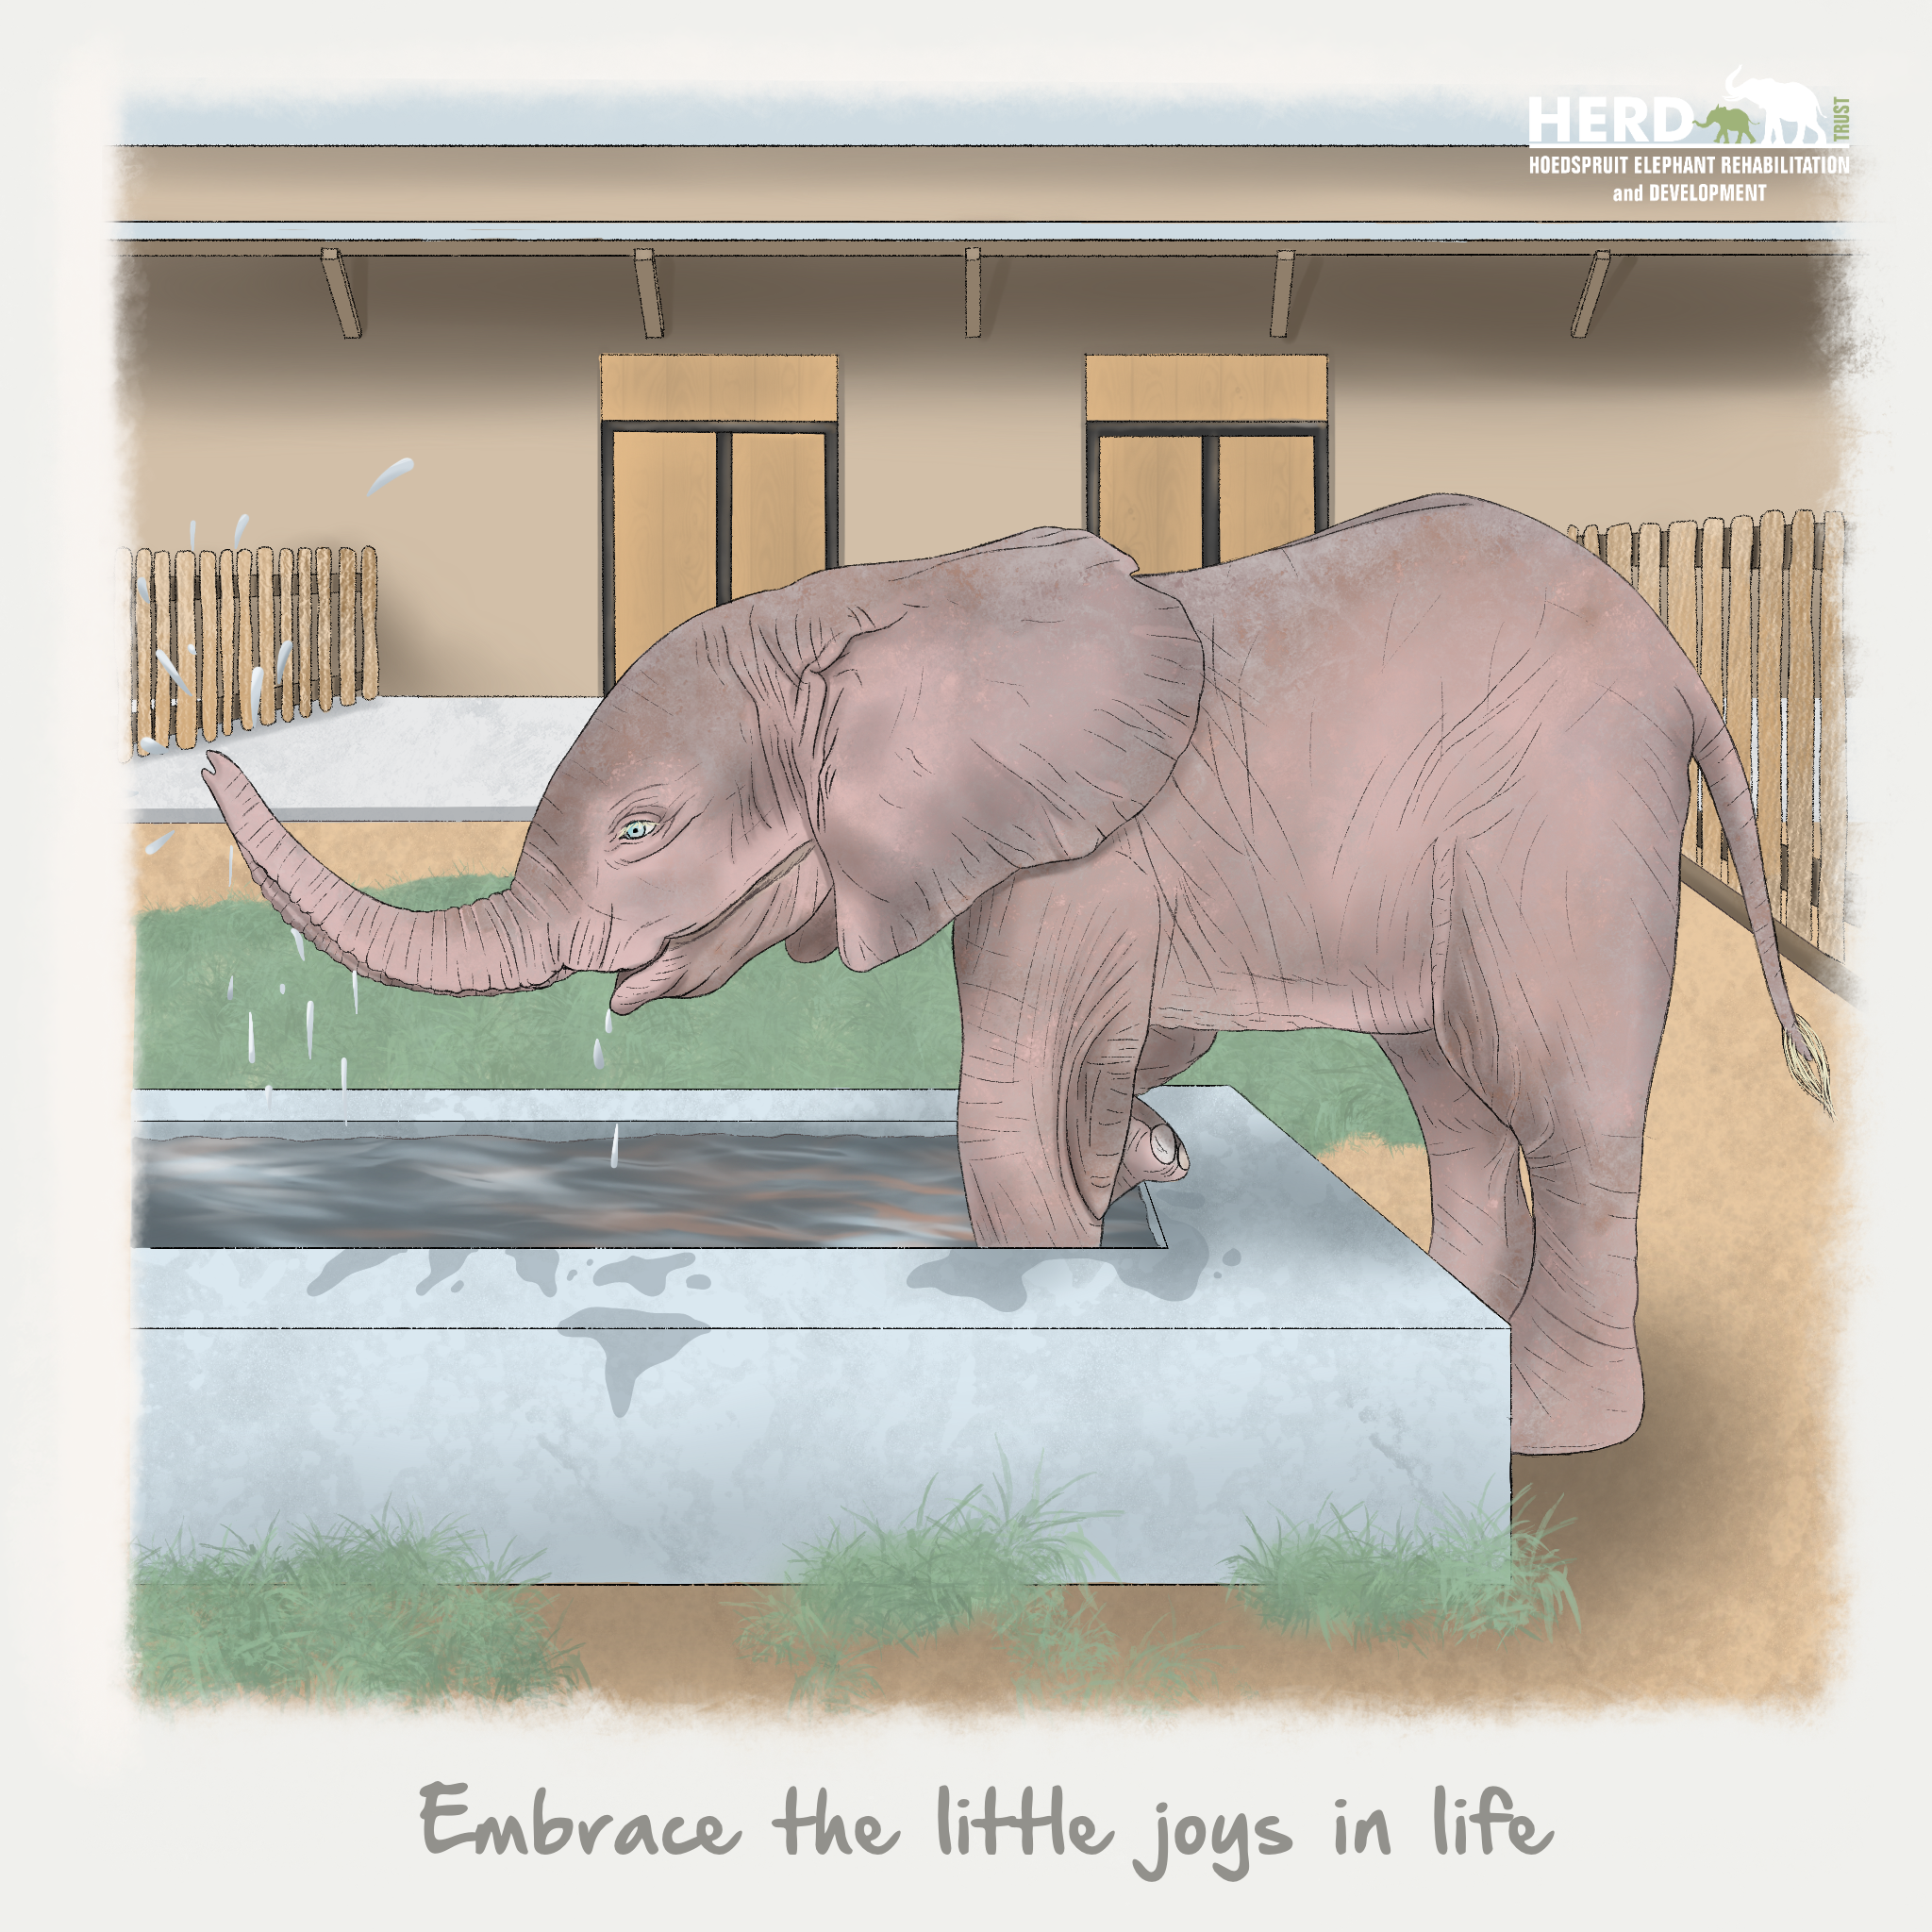 Wisdom 08 – Embrace the little joys in life.